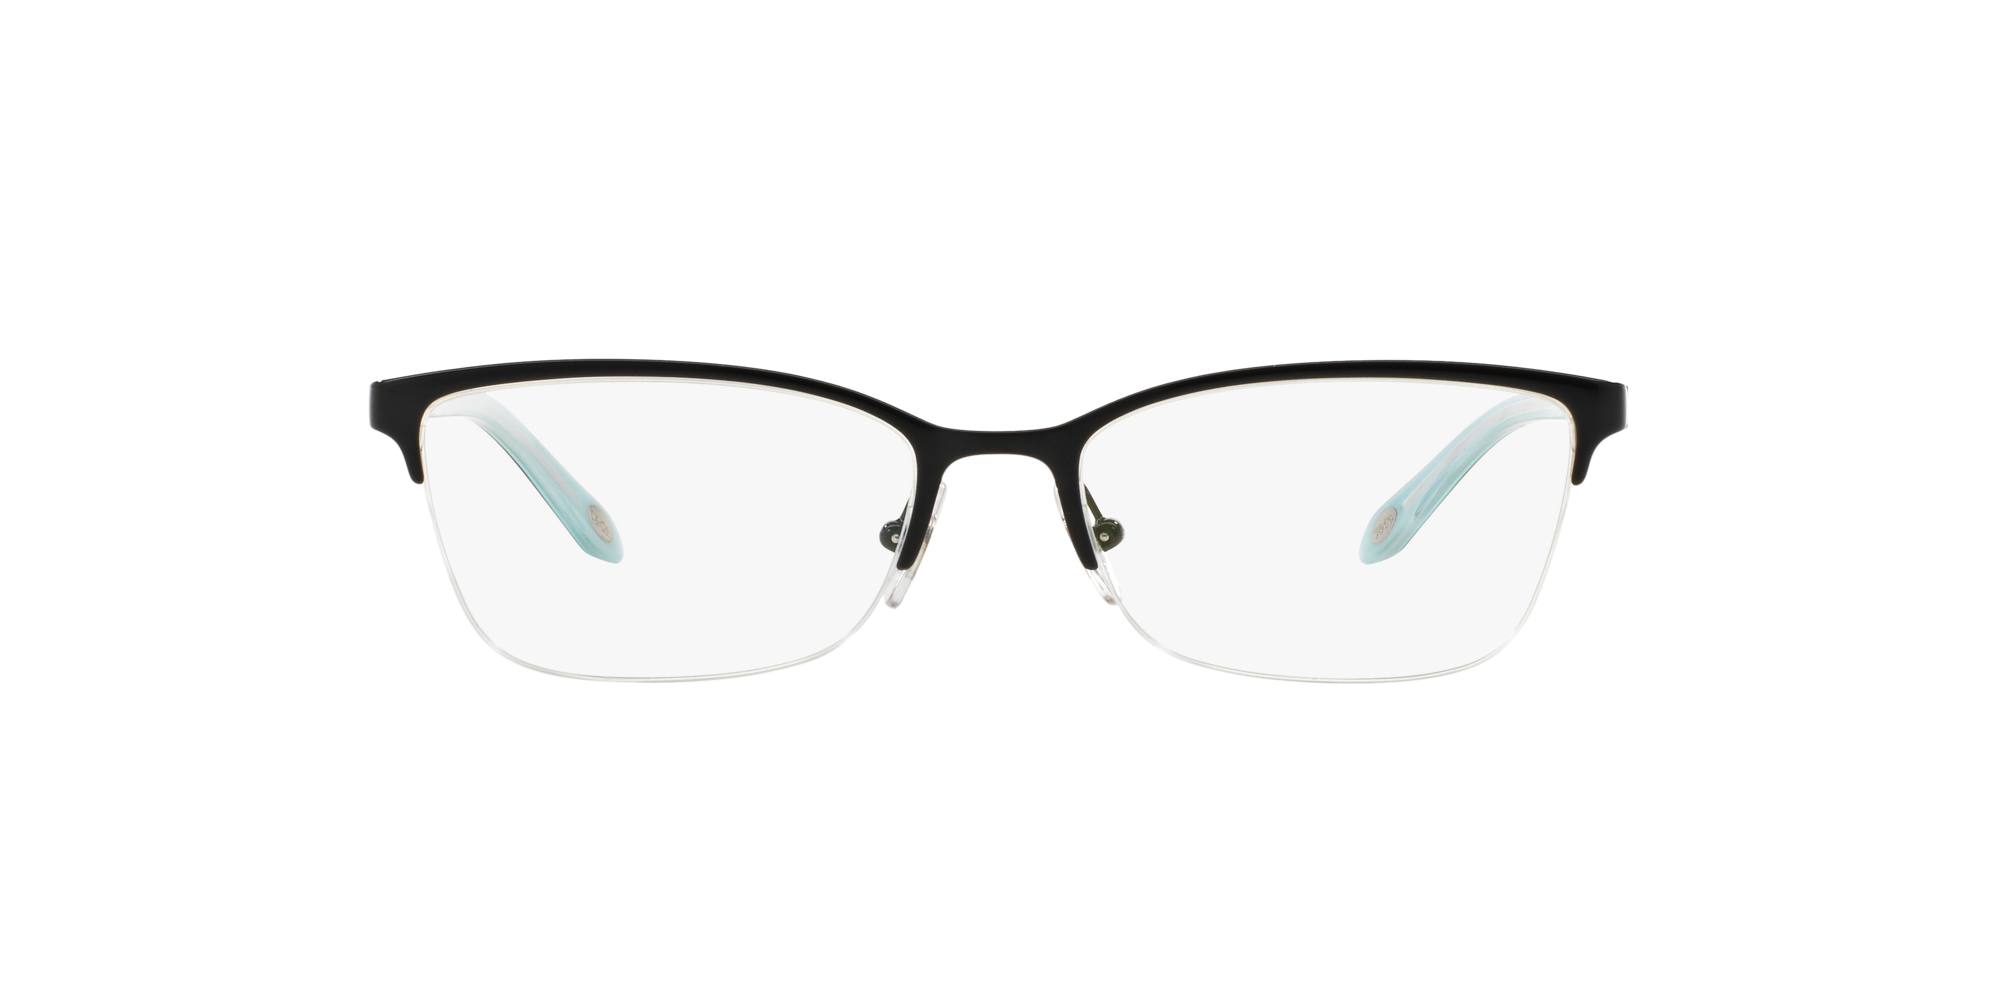 LensCrafters®: Prescription Eyewear & Contact Lenses - Eyewear